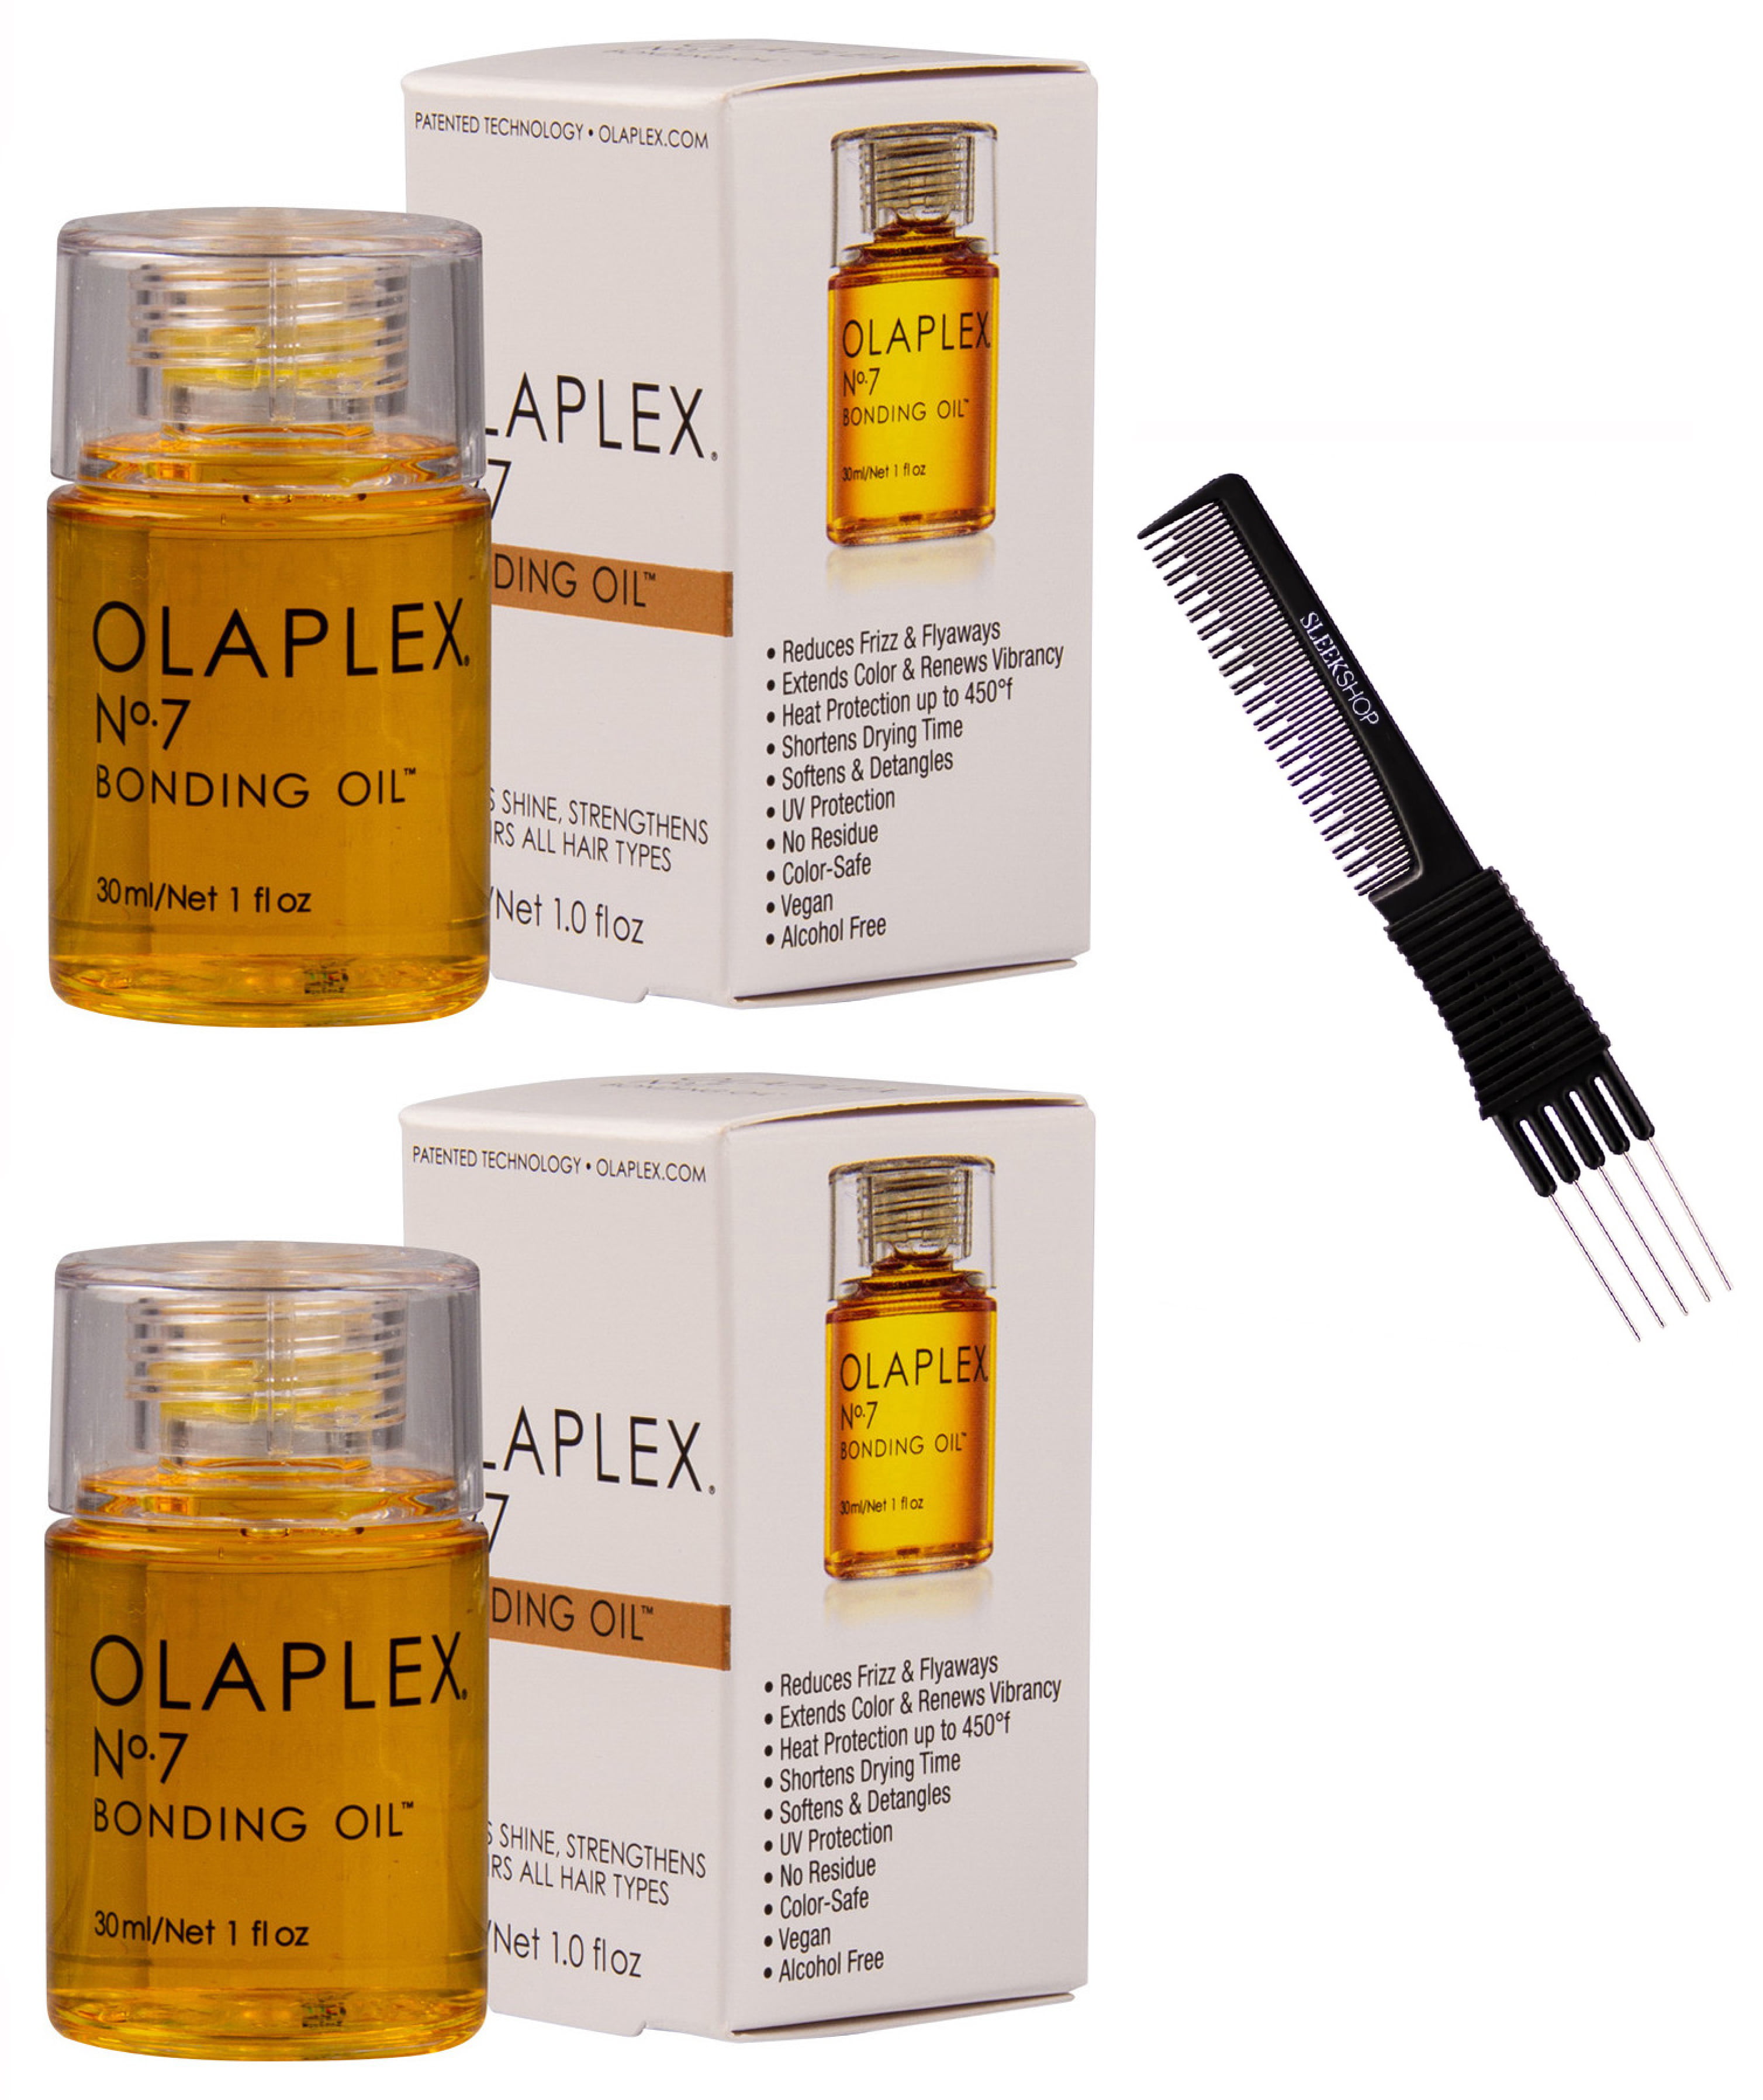 Olaplex 7 Bonding Oil aceite de peinado